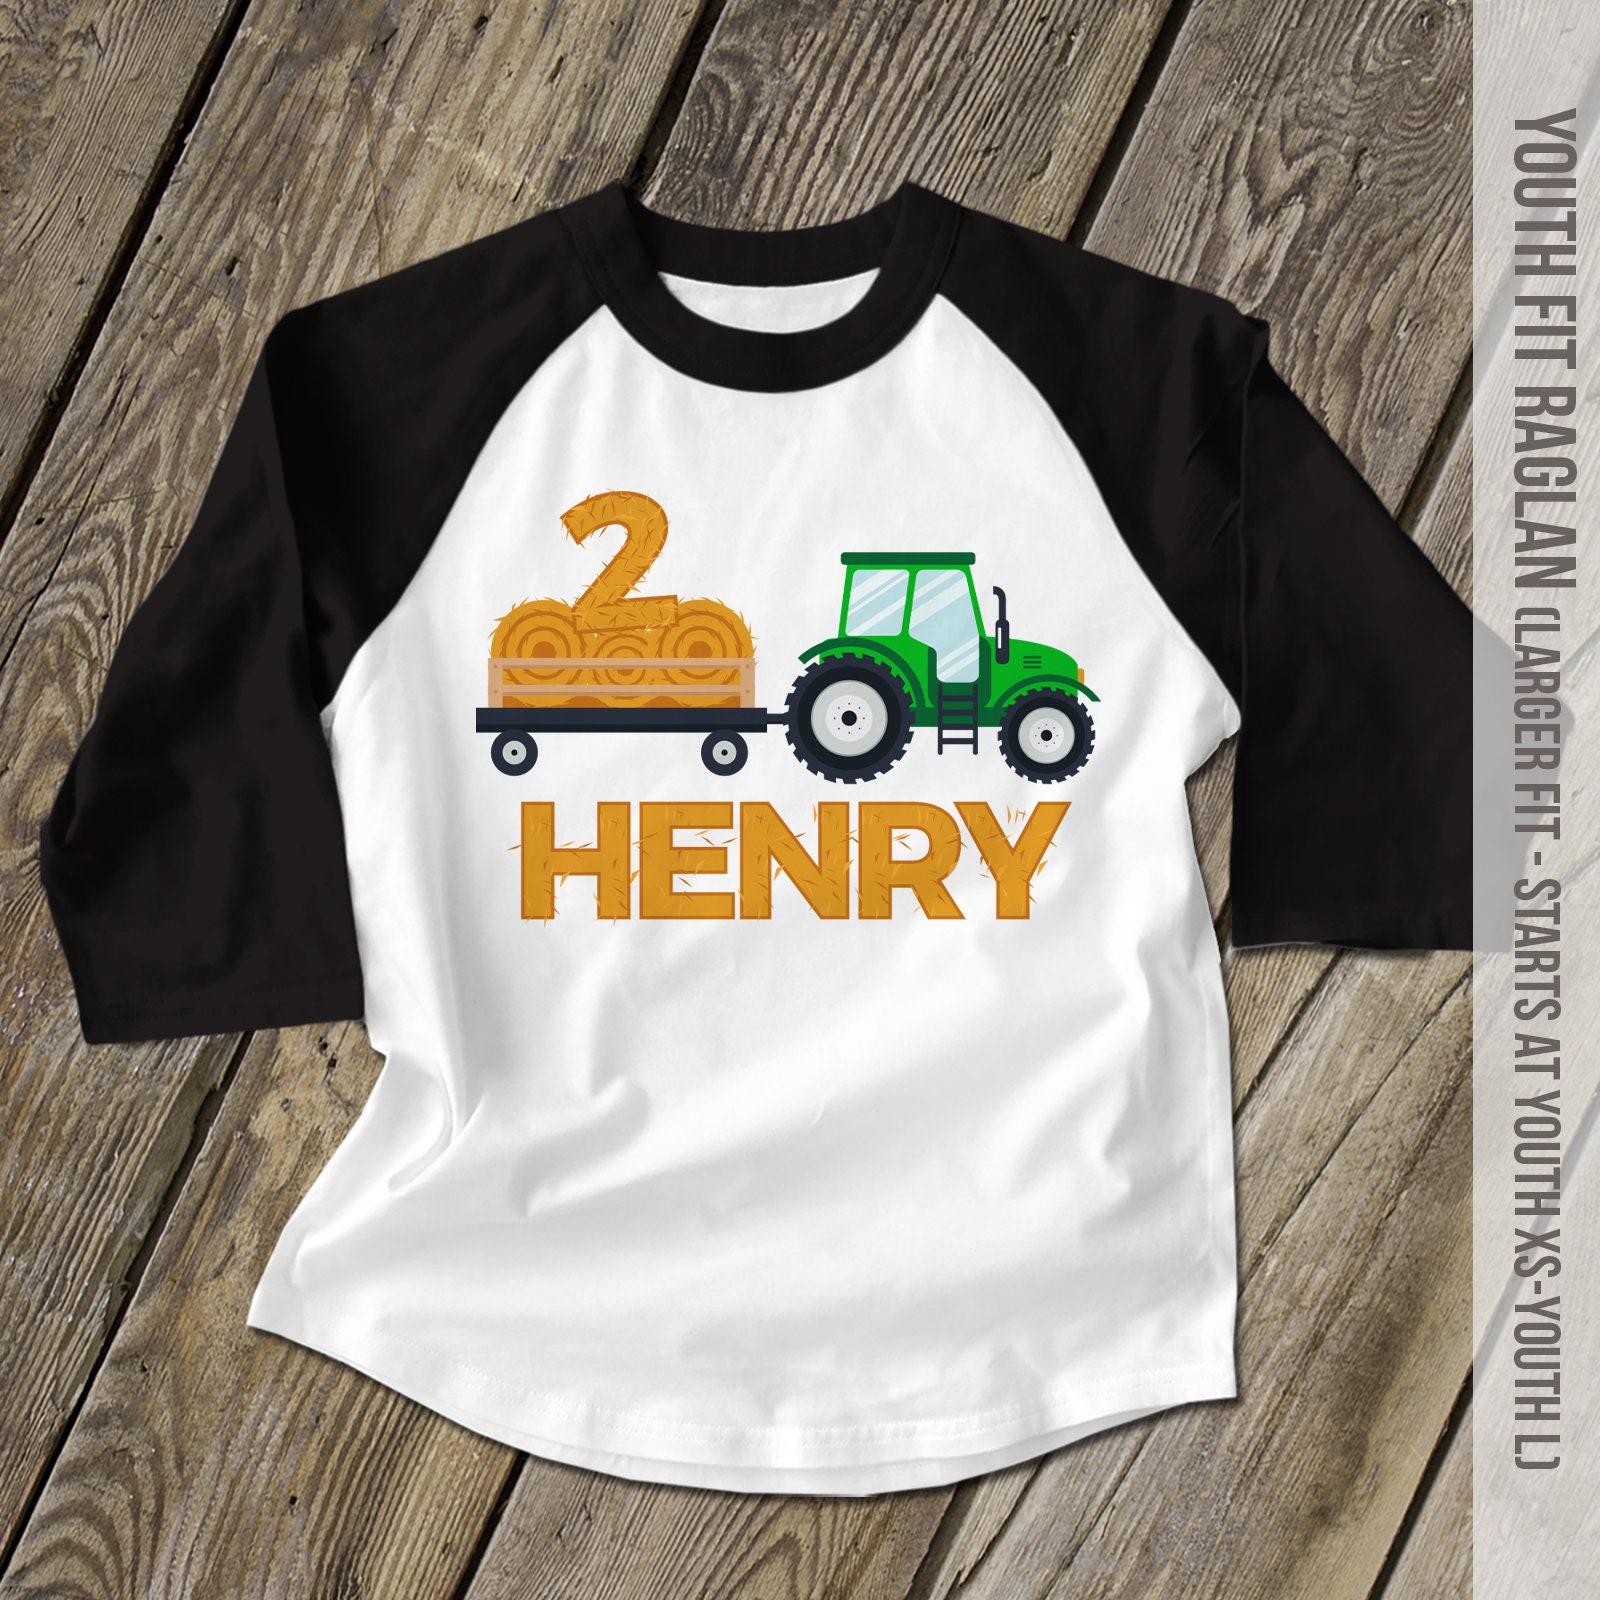 Birthday shirt birthday tractor with hay bales raglan shirt | Etsy